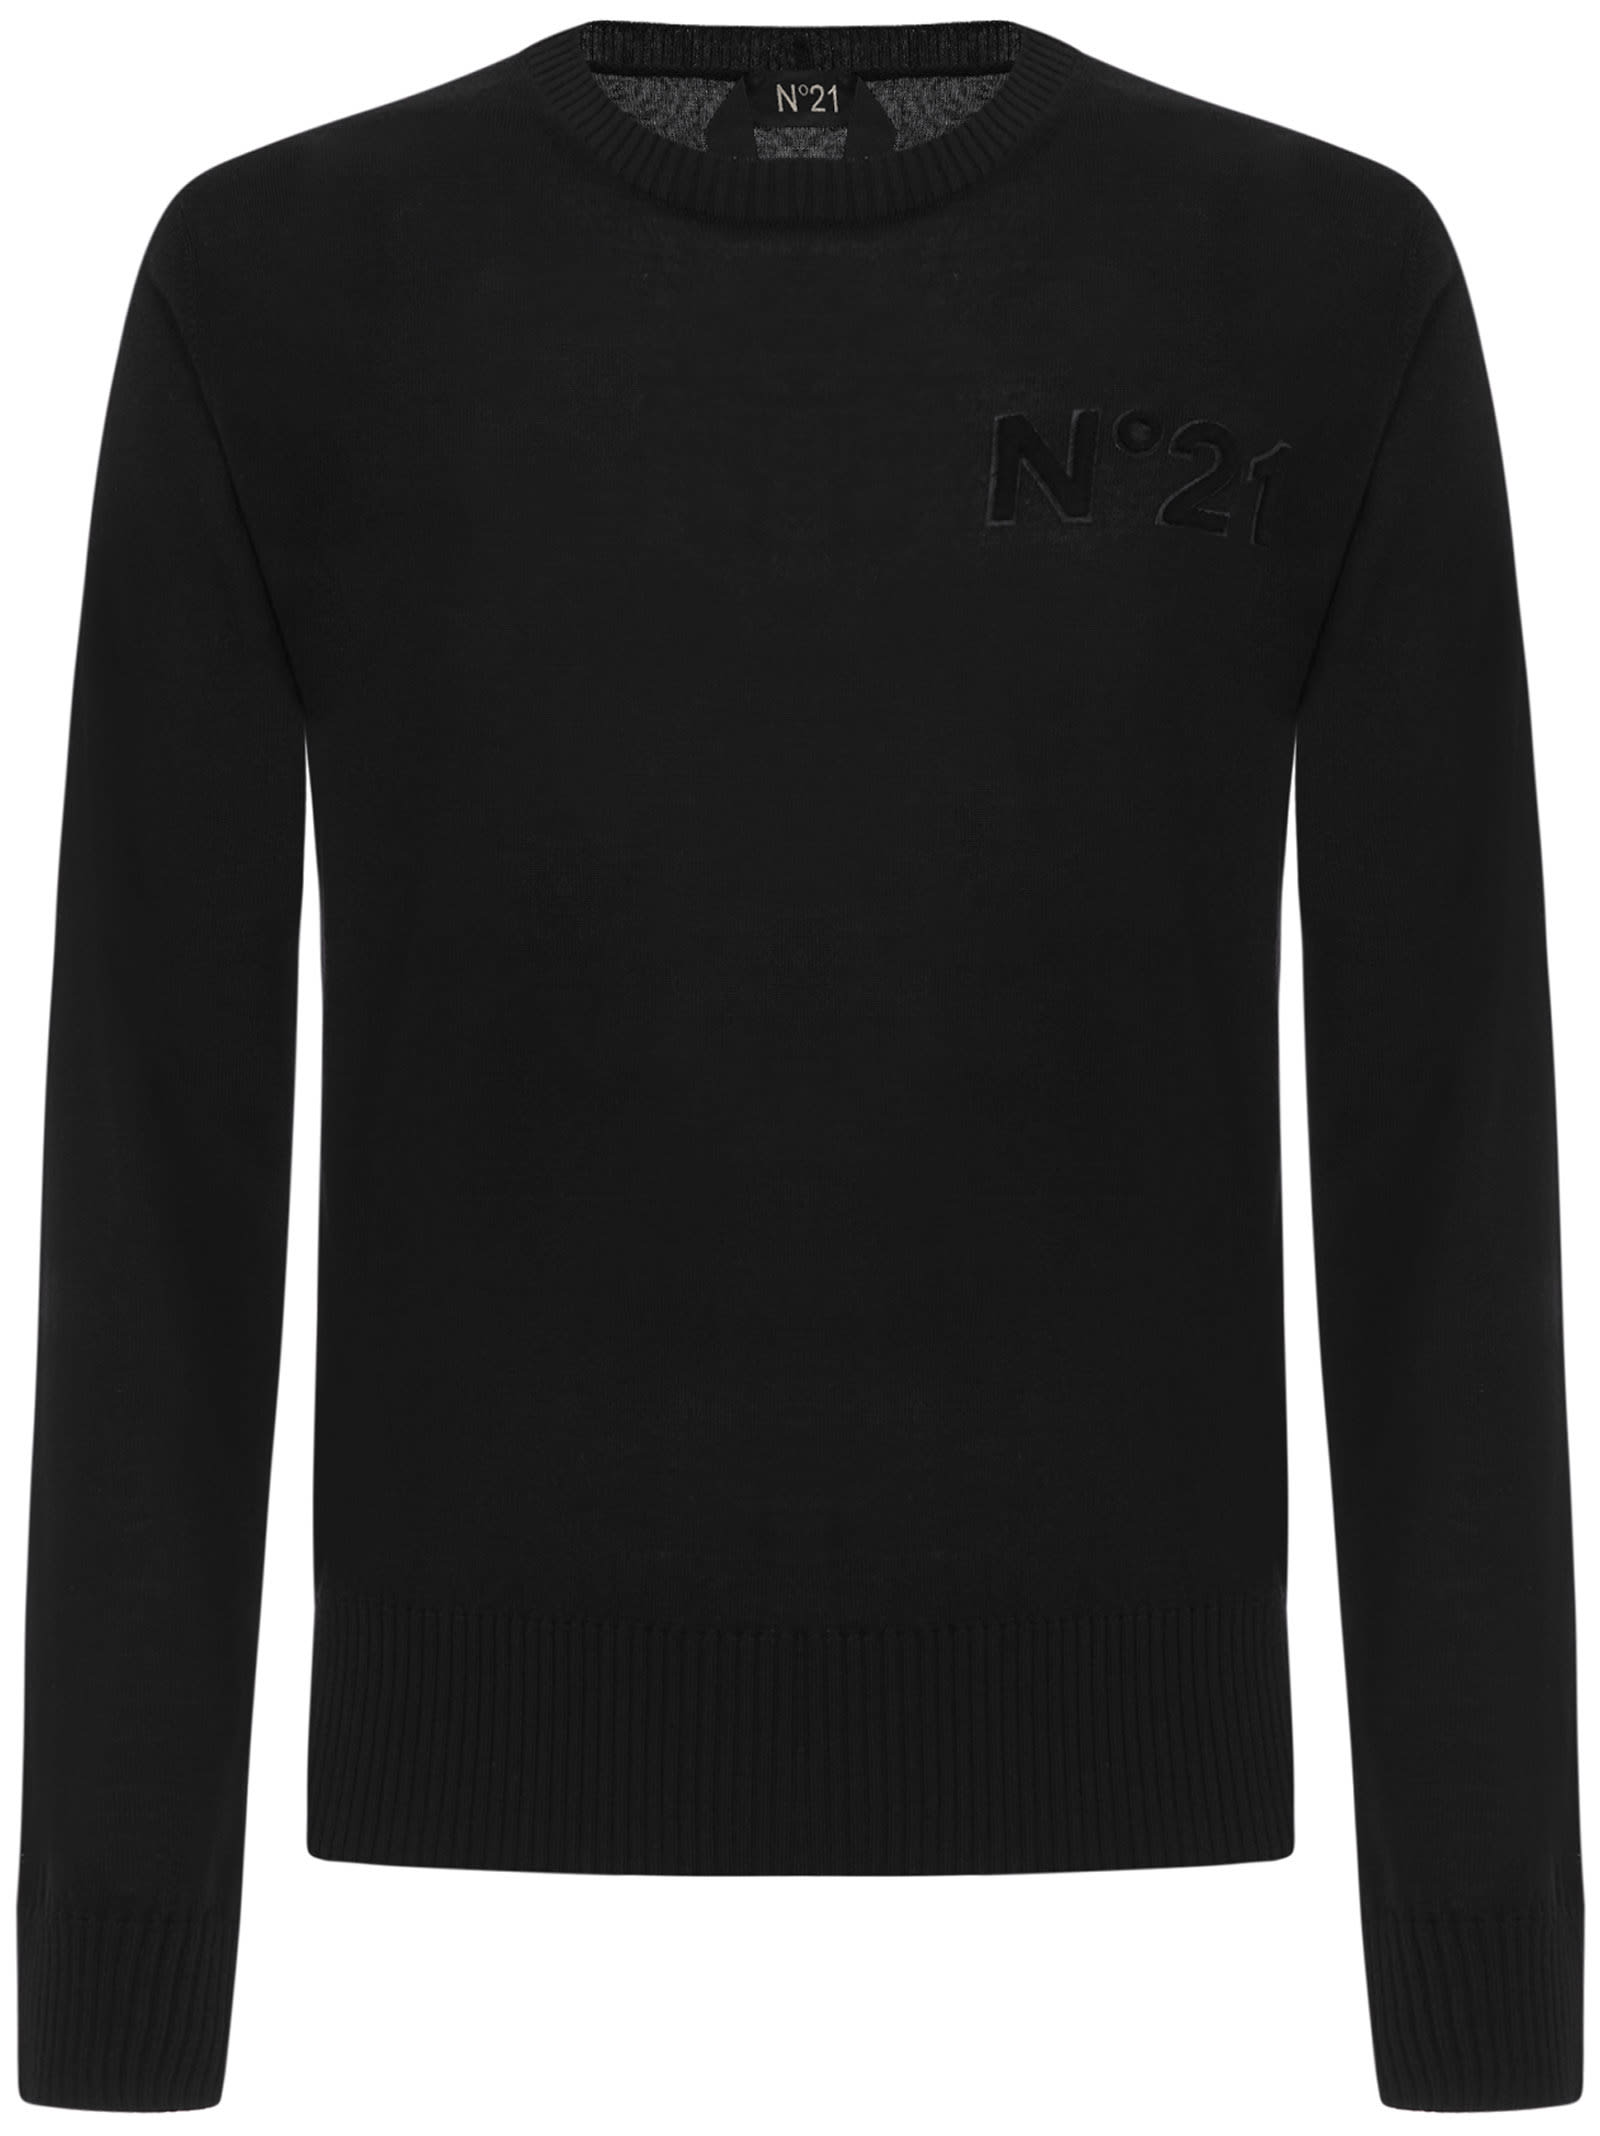 N.21 N°21 Sweater